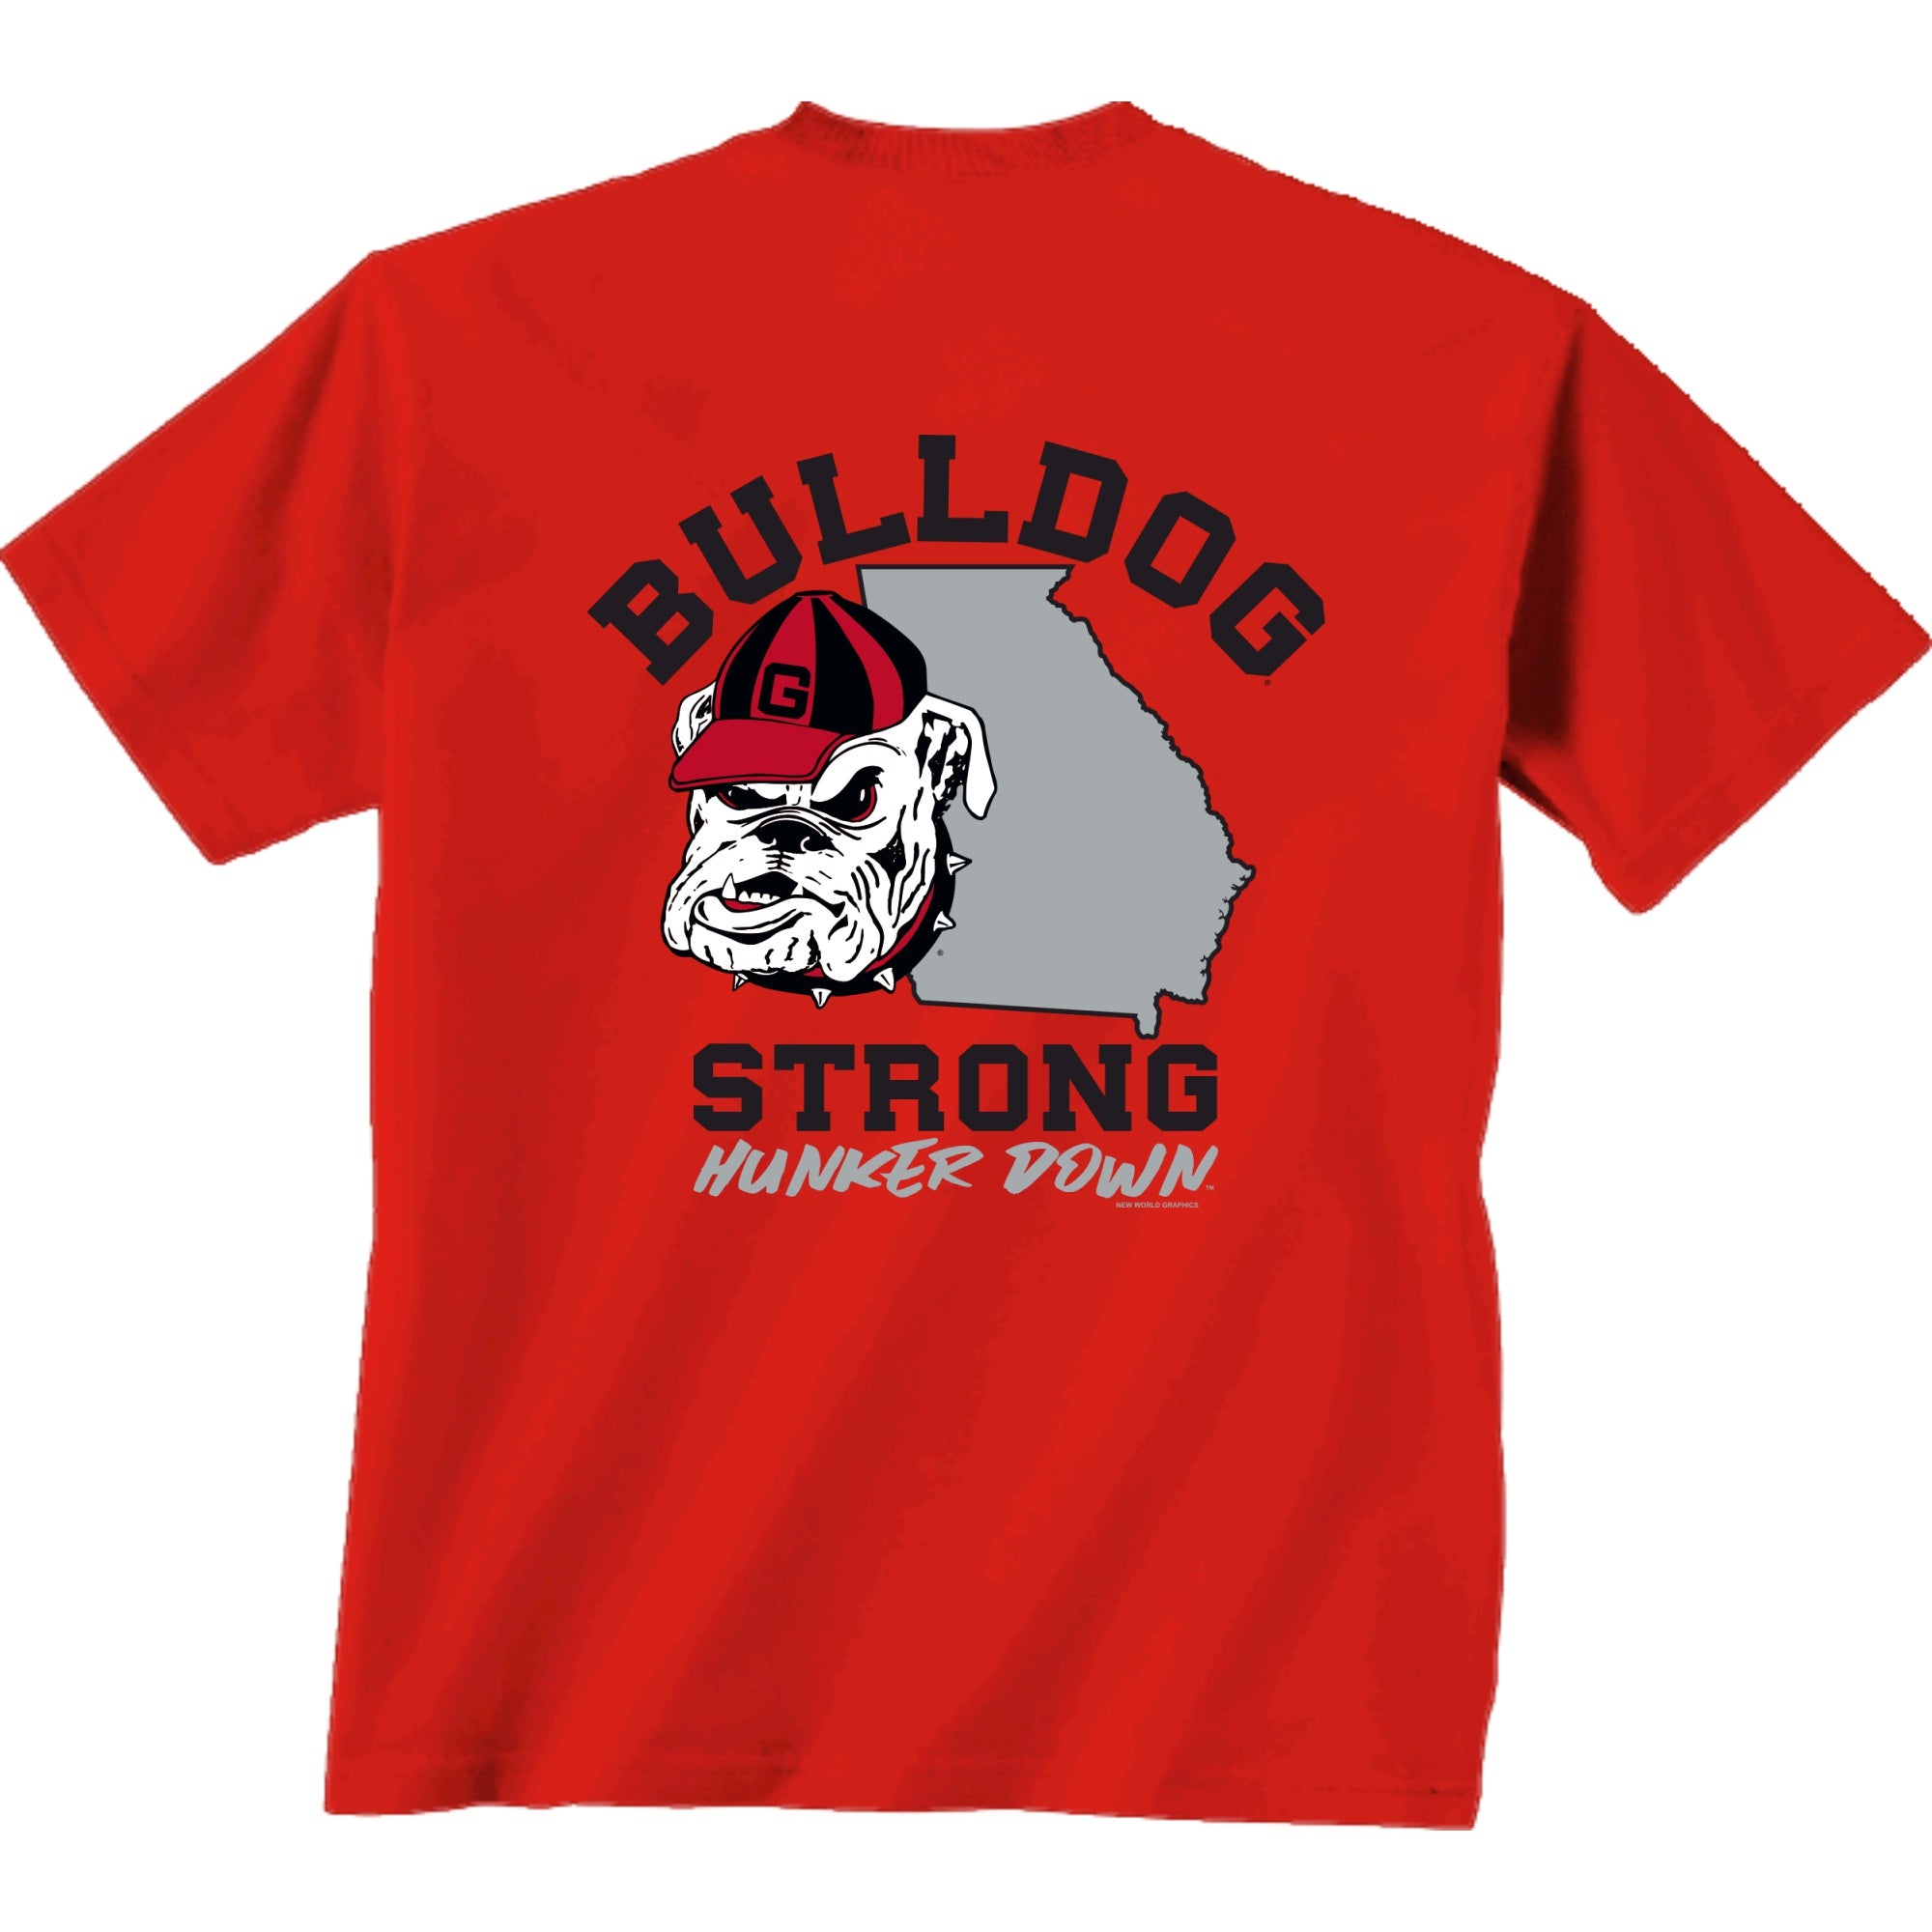 Bulldog "Strong" Shirt